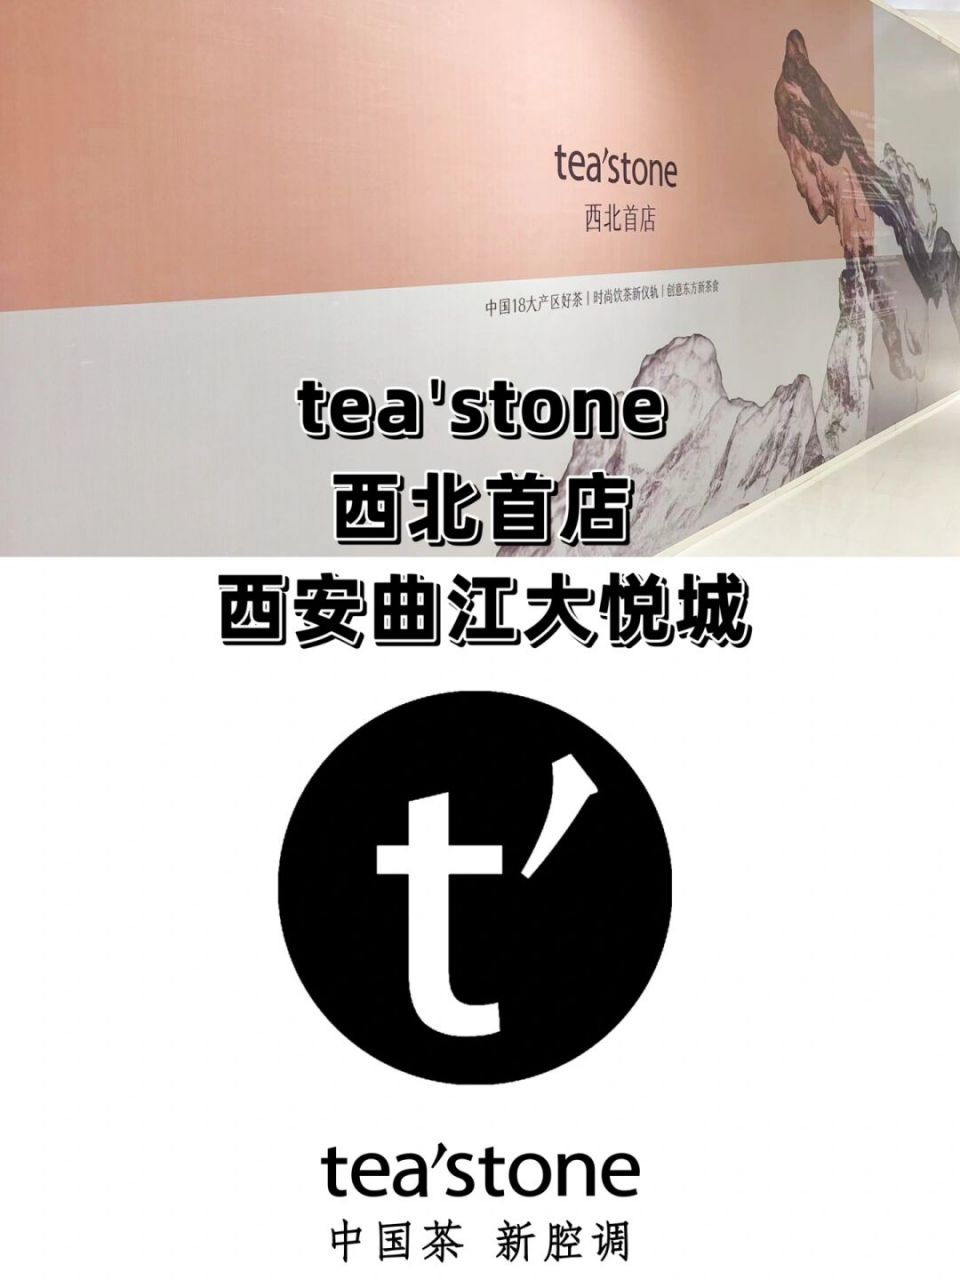 teastone创始人李姝图片